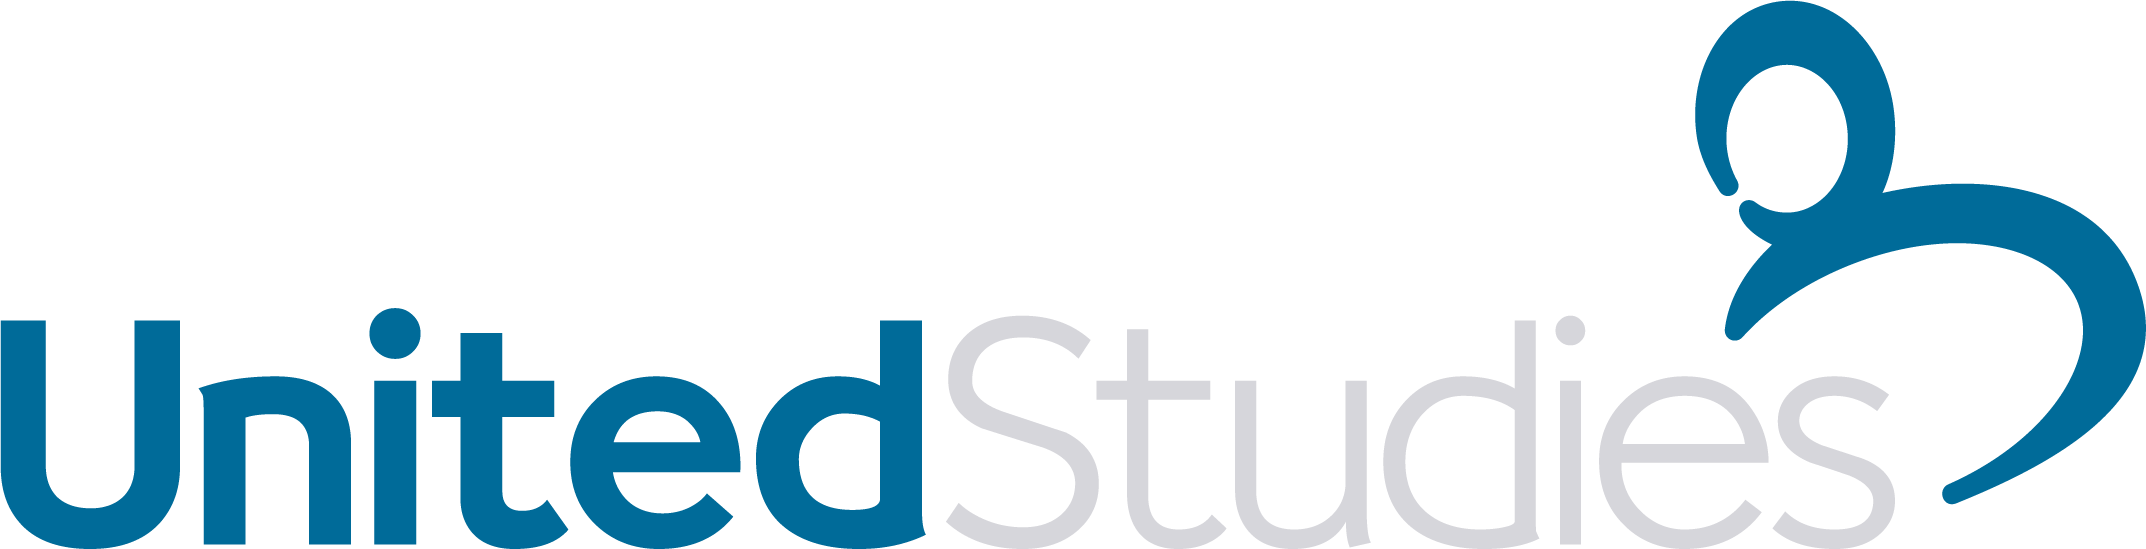 united-studies-logo